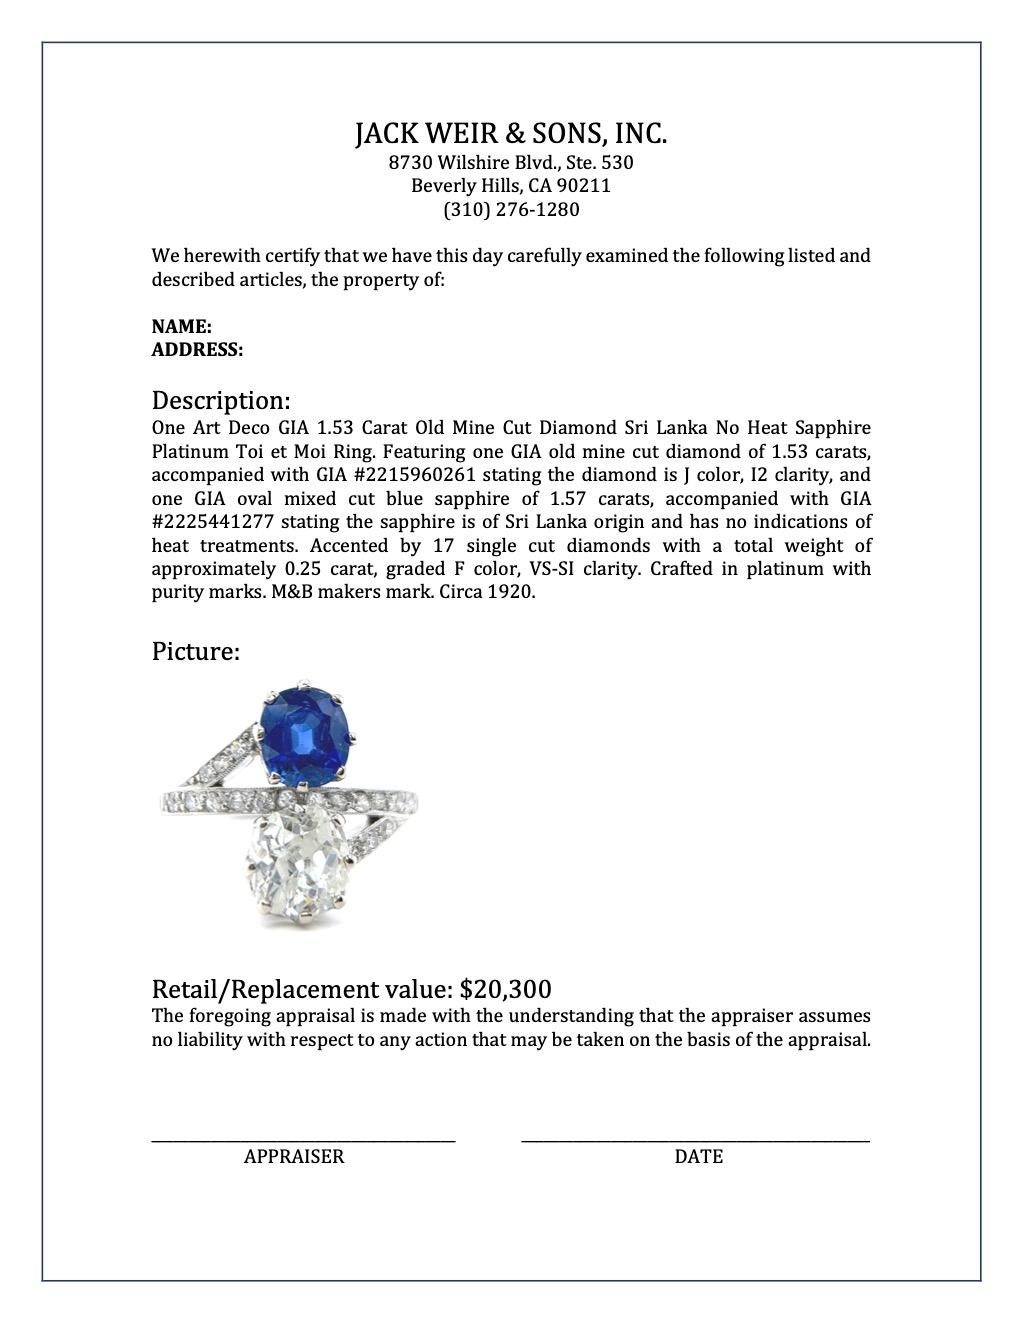 Art Deco GIA 1.53 Carat Old Mine Cut Diamond Sapphire Platinum Toi Et Moi Ring 5